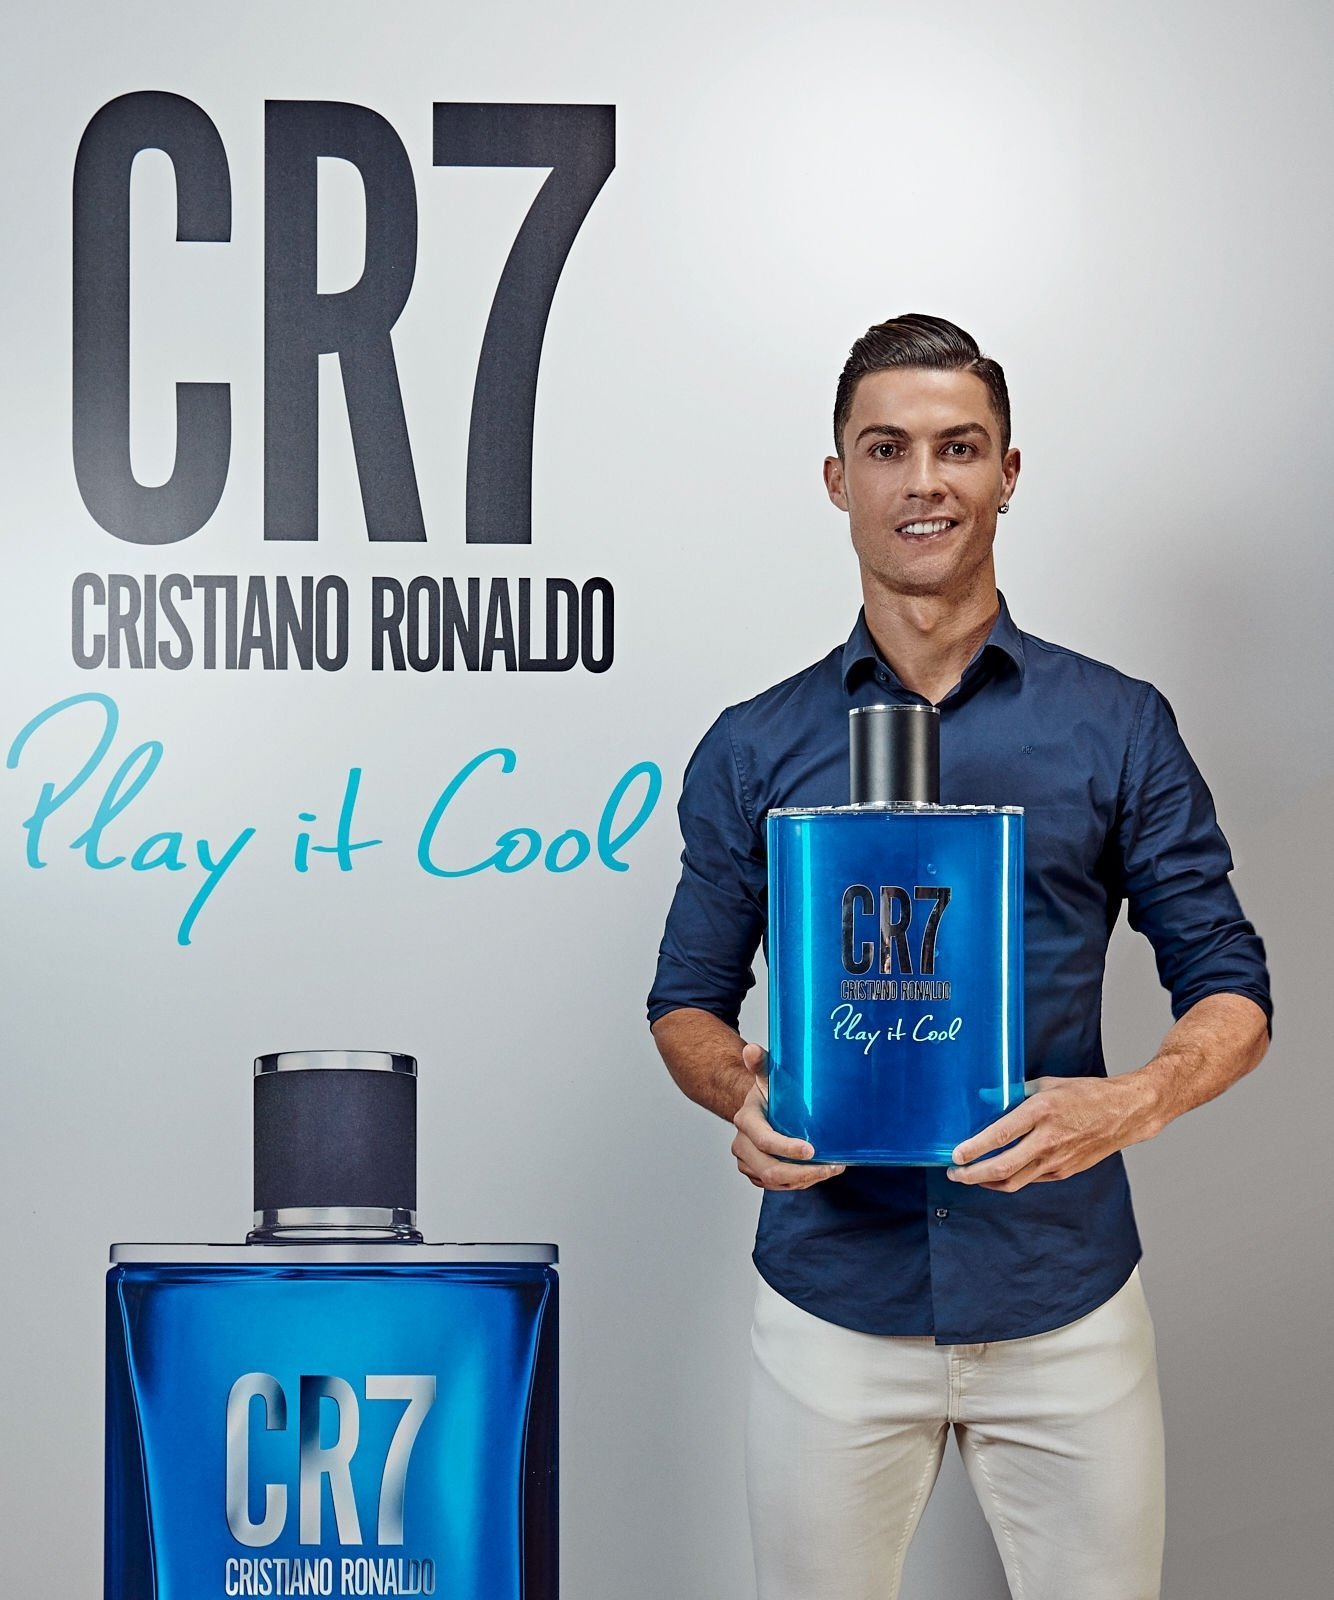 Cr7 Cristiano Ronaldo духи. Cr7 духи Play it cool. Cristiano Ronaldo cr7 Play it cool Парфюм. Ronaldo аромат cr7. Cristiano ronaldo туалетная вода cr7